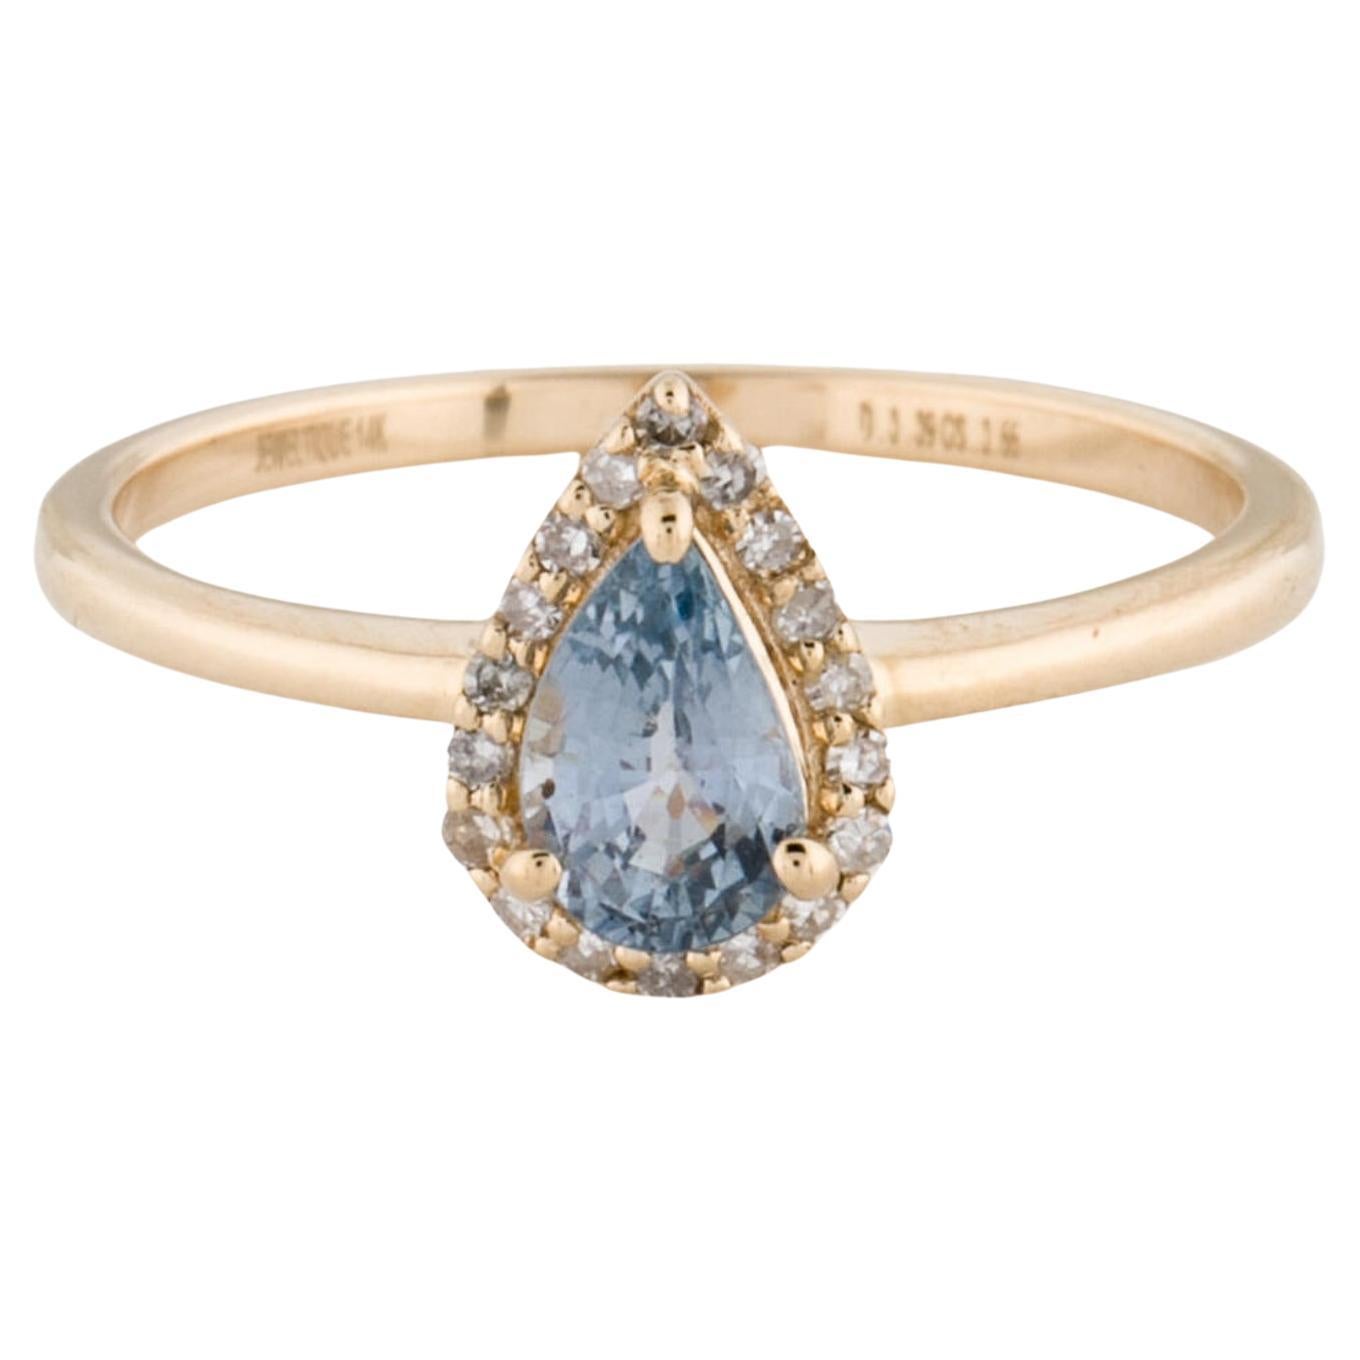 14K Sapphire & Diamond Cocktail Ring - Size 6.75 - Luxurious Jewelry Design